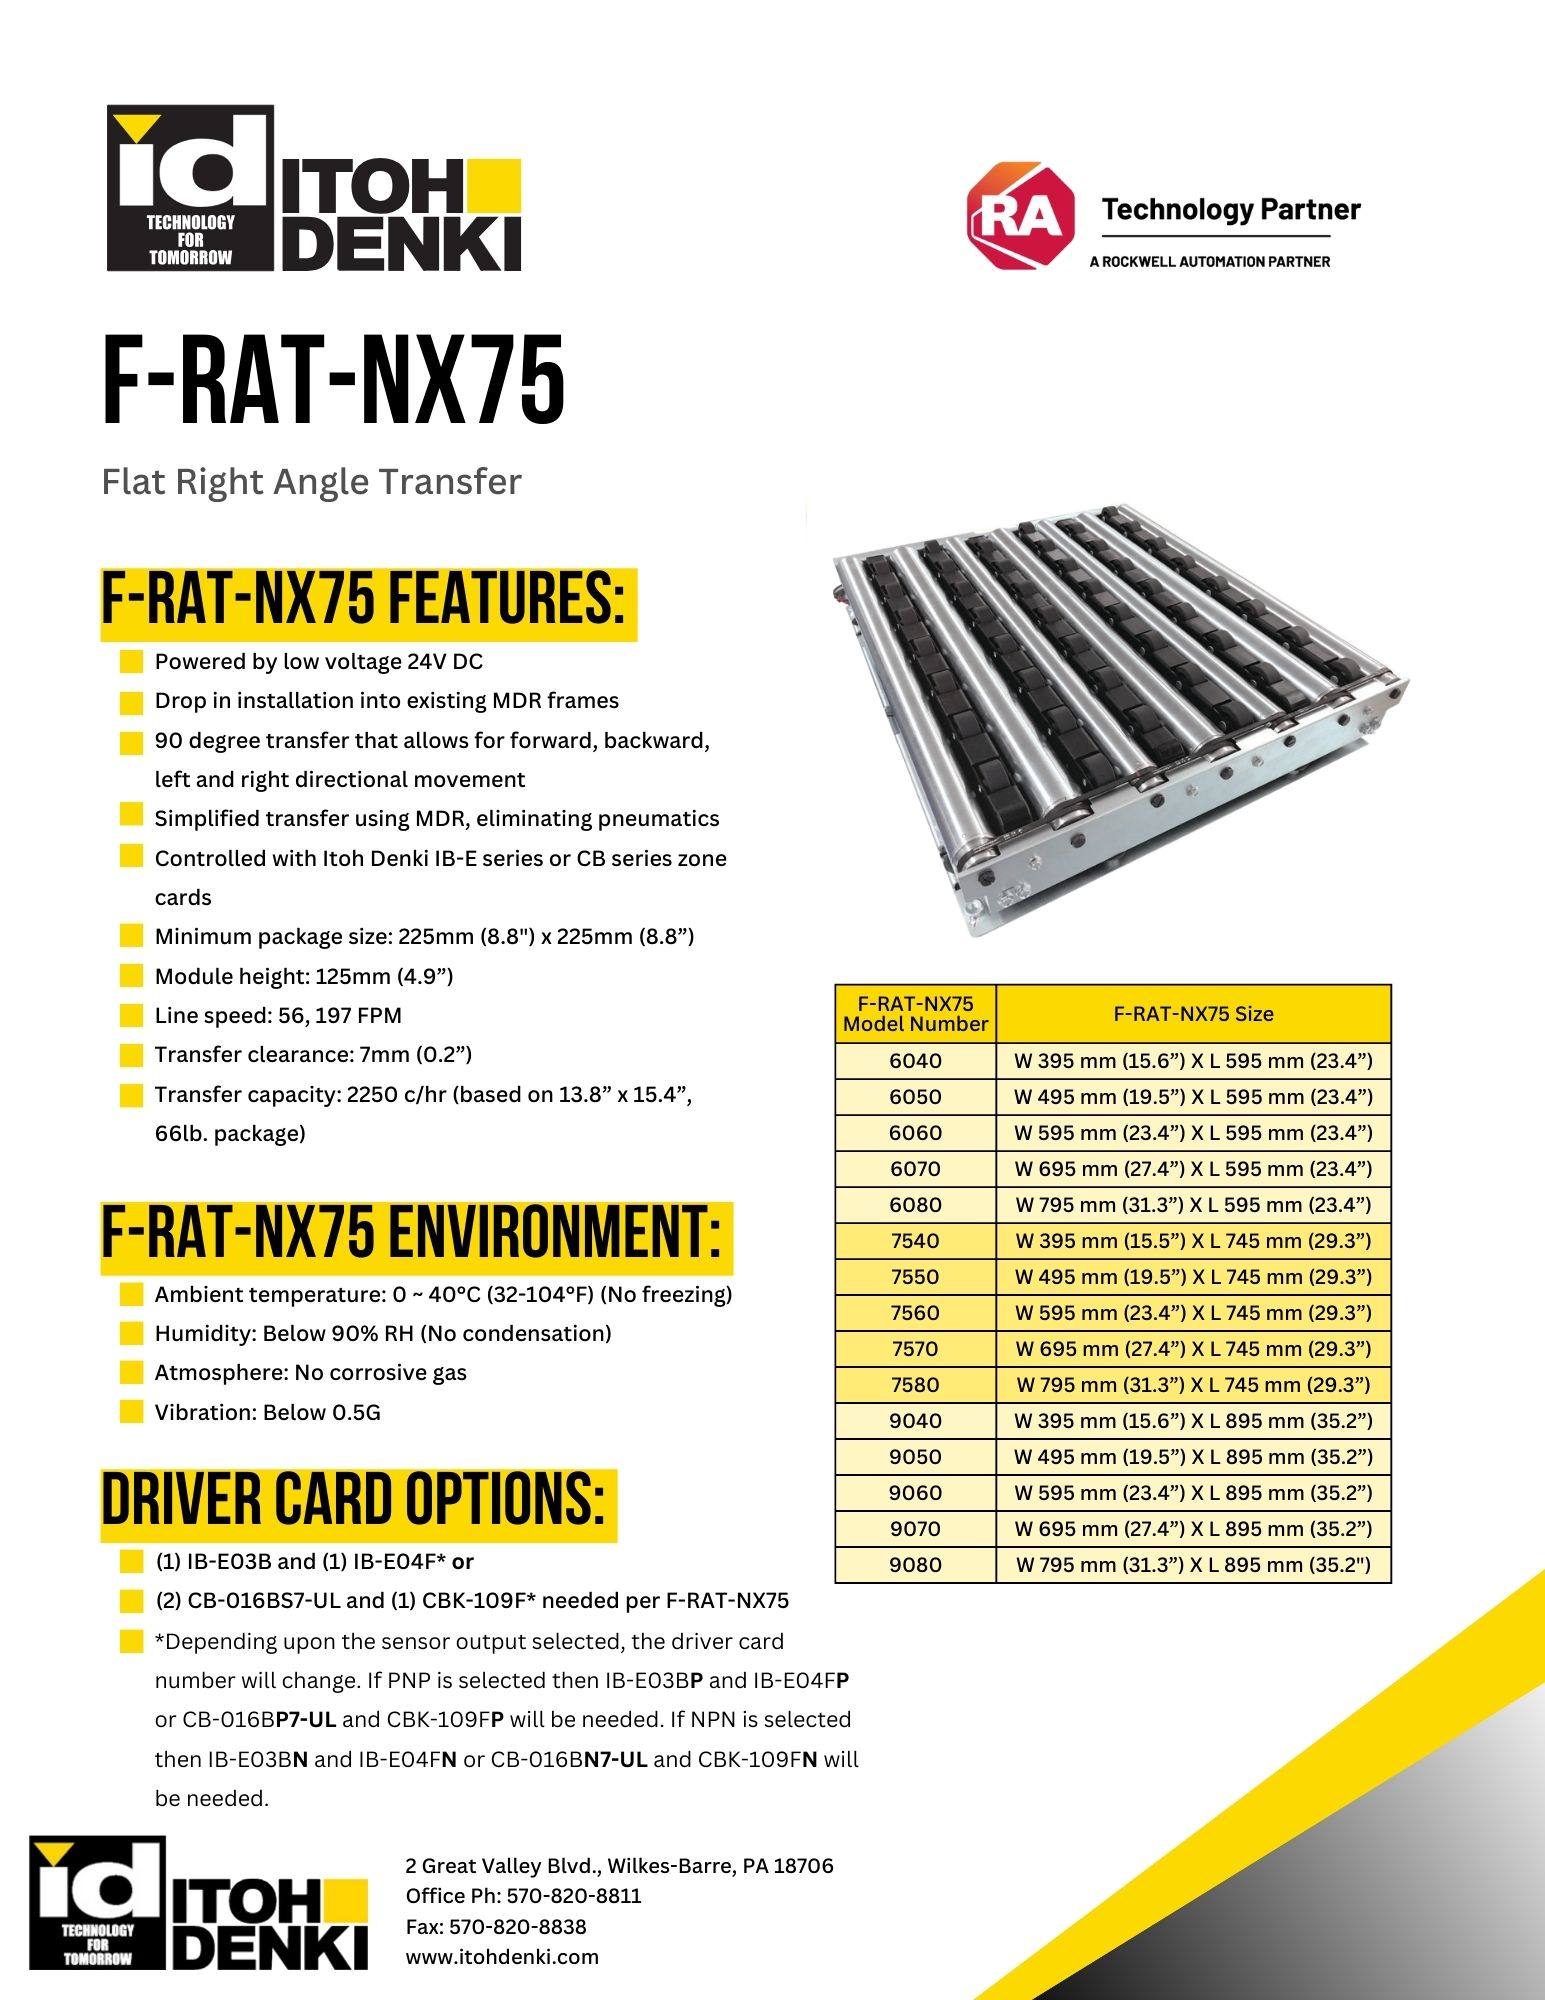 Itoh Denki Flat Right Angle Transfer (F-RAT-NX75) conveyor module product sheet